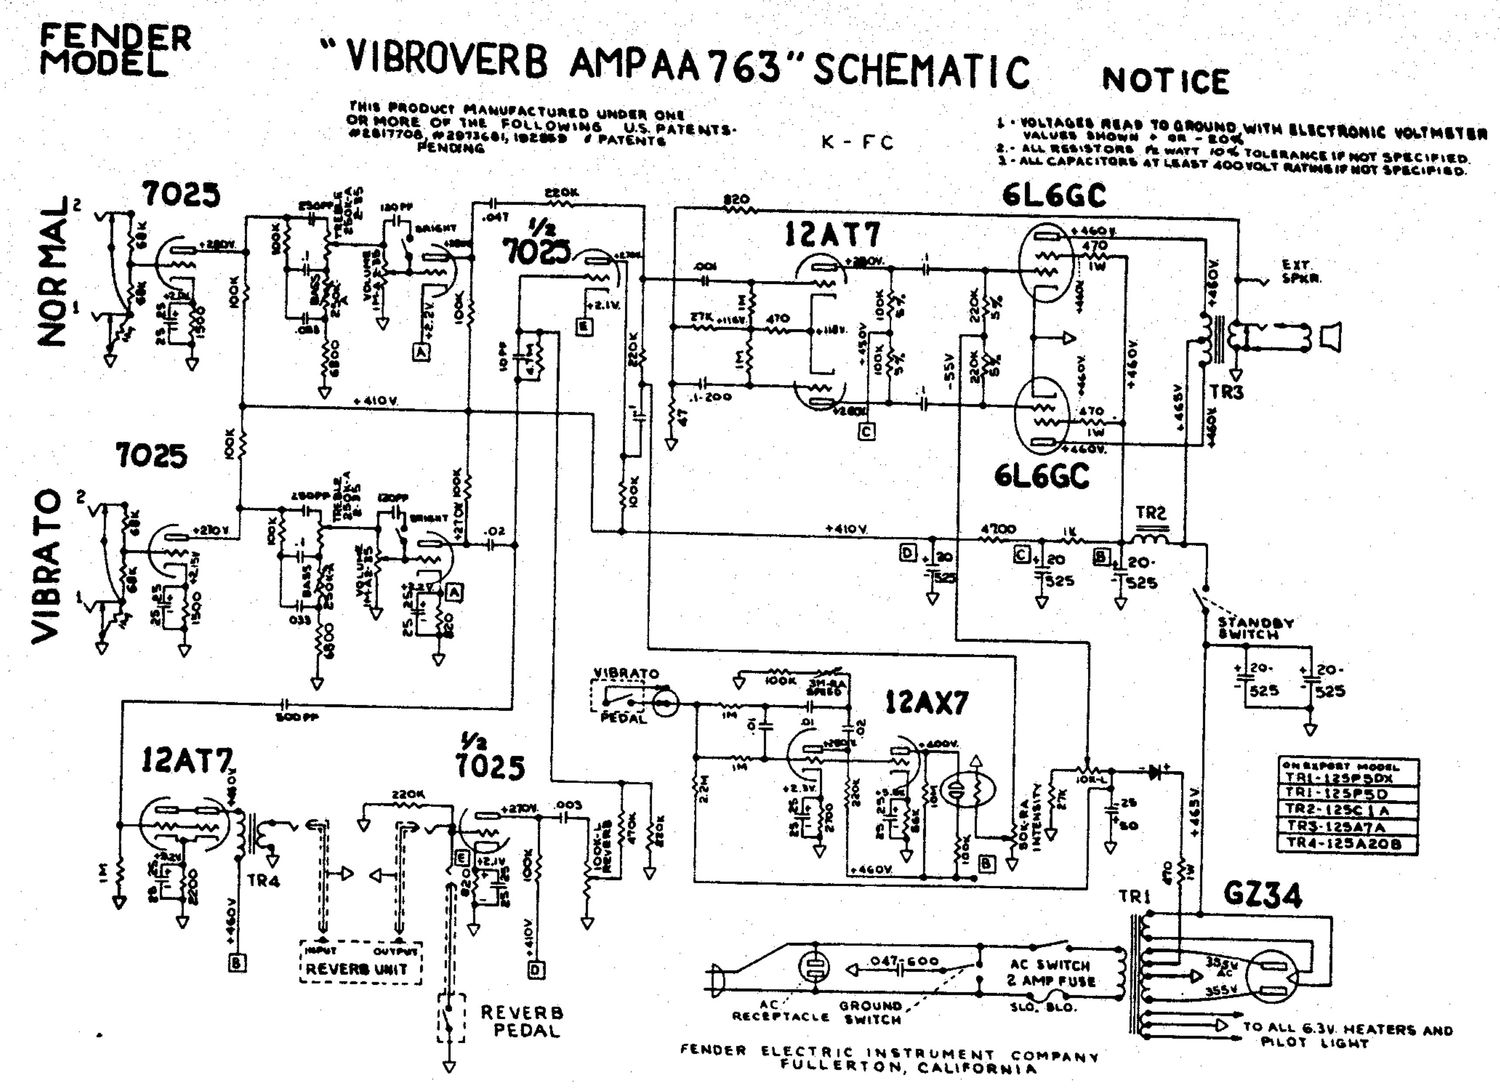 fender vibroverb aa763 schematic